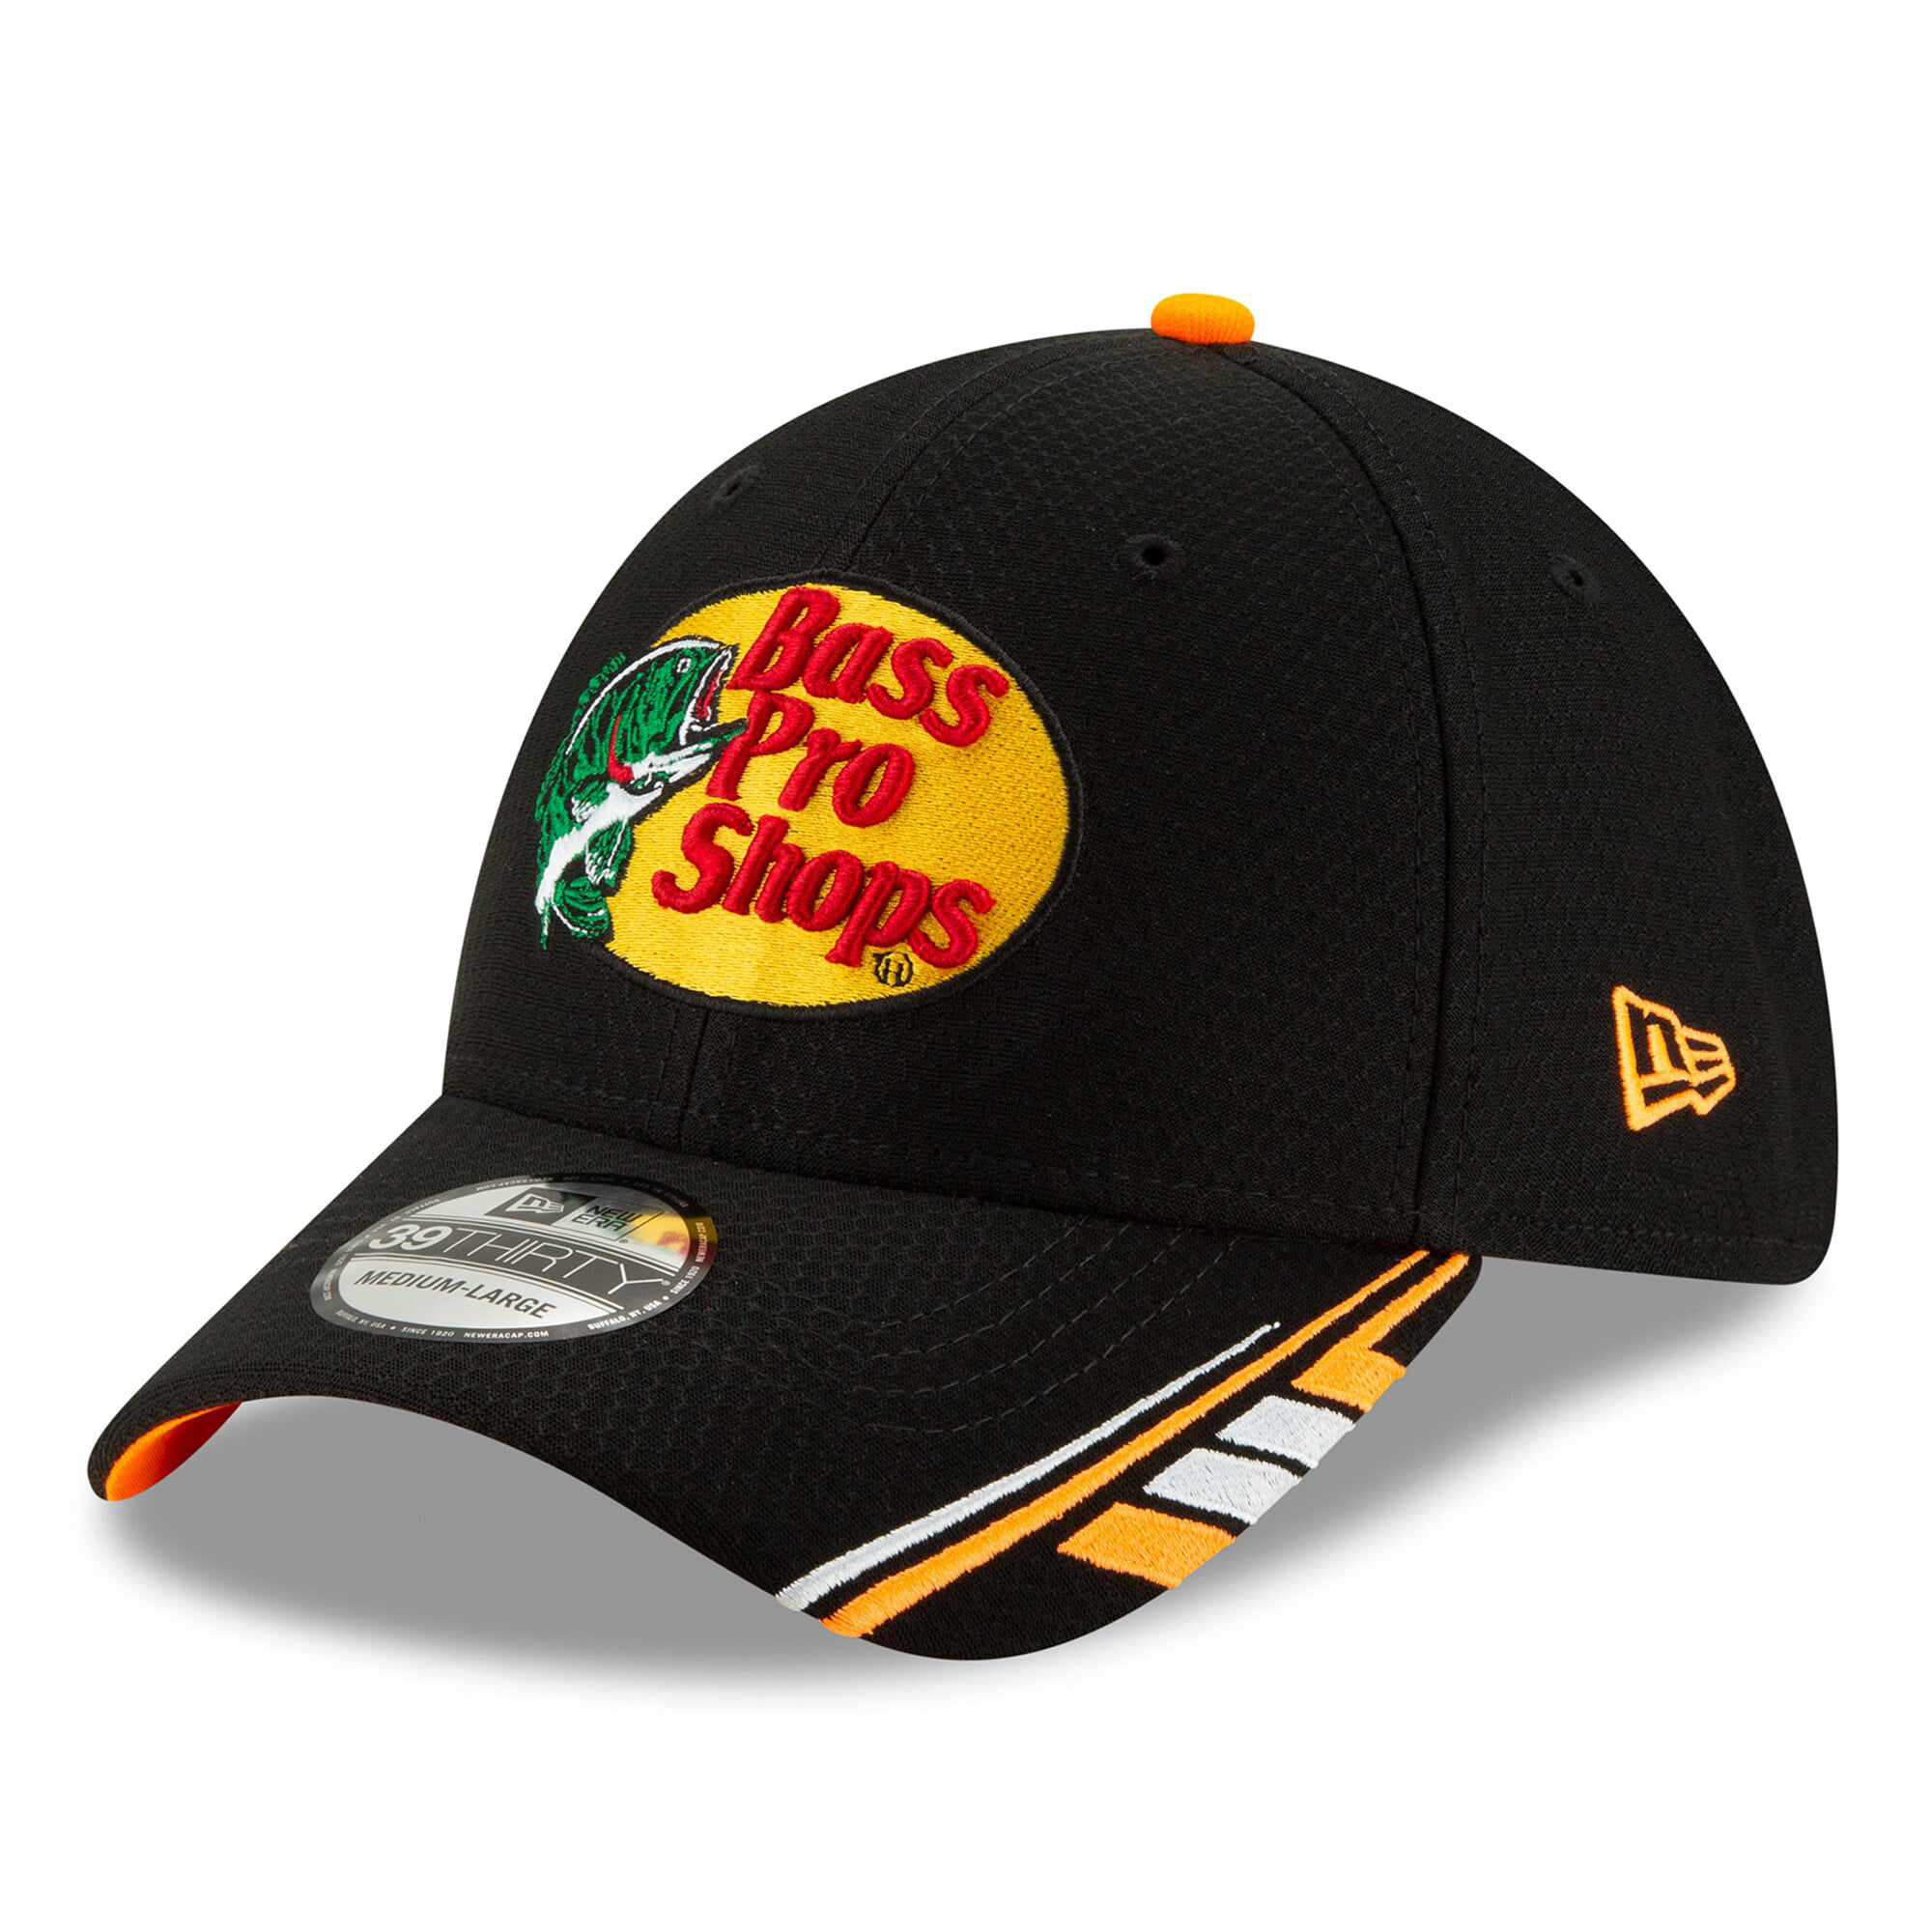 Bass Pro-Shops Trucker Hat Sports Baseball Cap Sandwich Hat Cowboy Hat Hip-Hop Hat